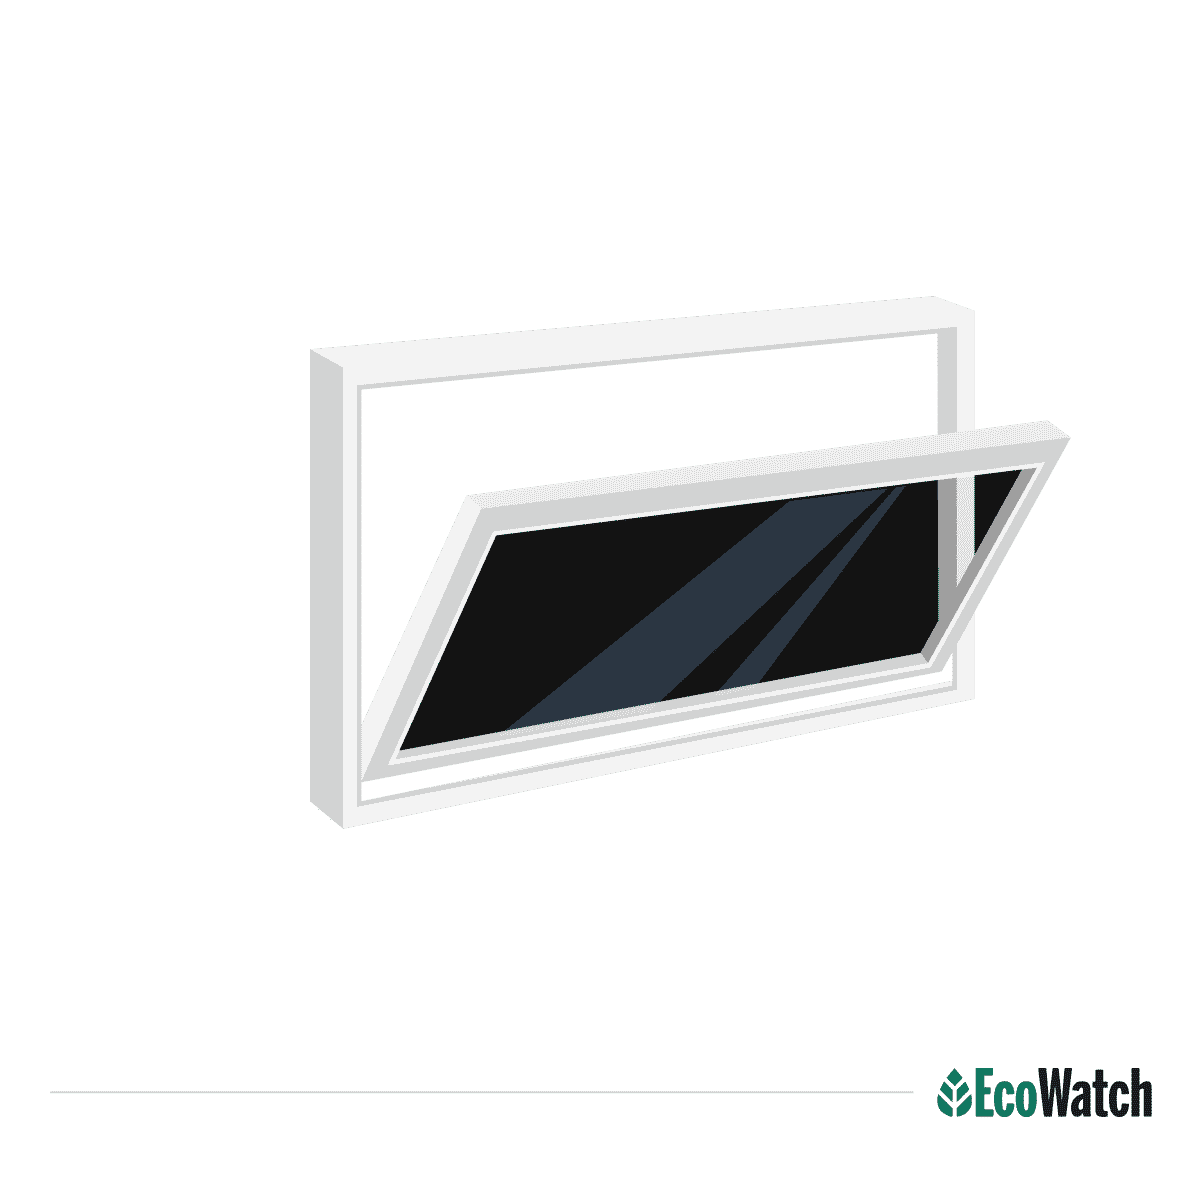 Hopper Windows